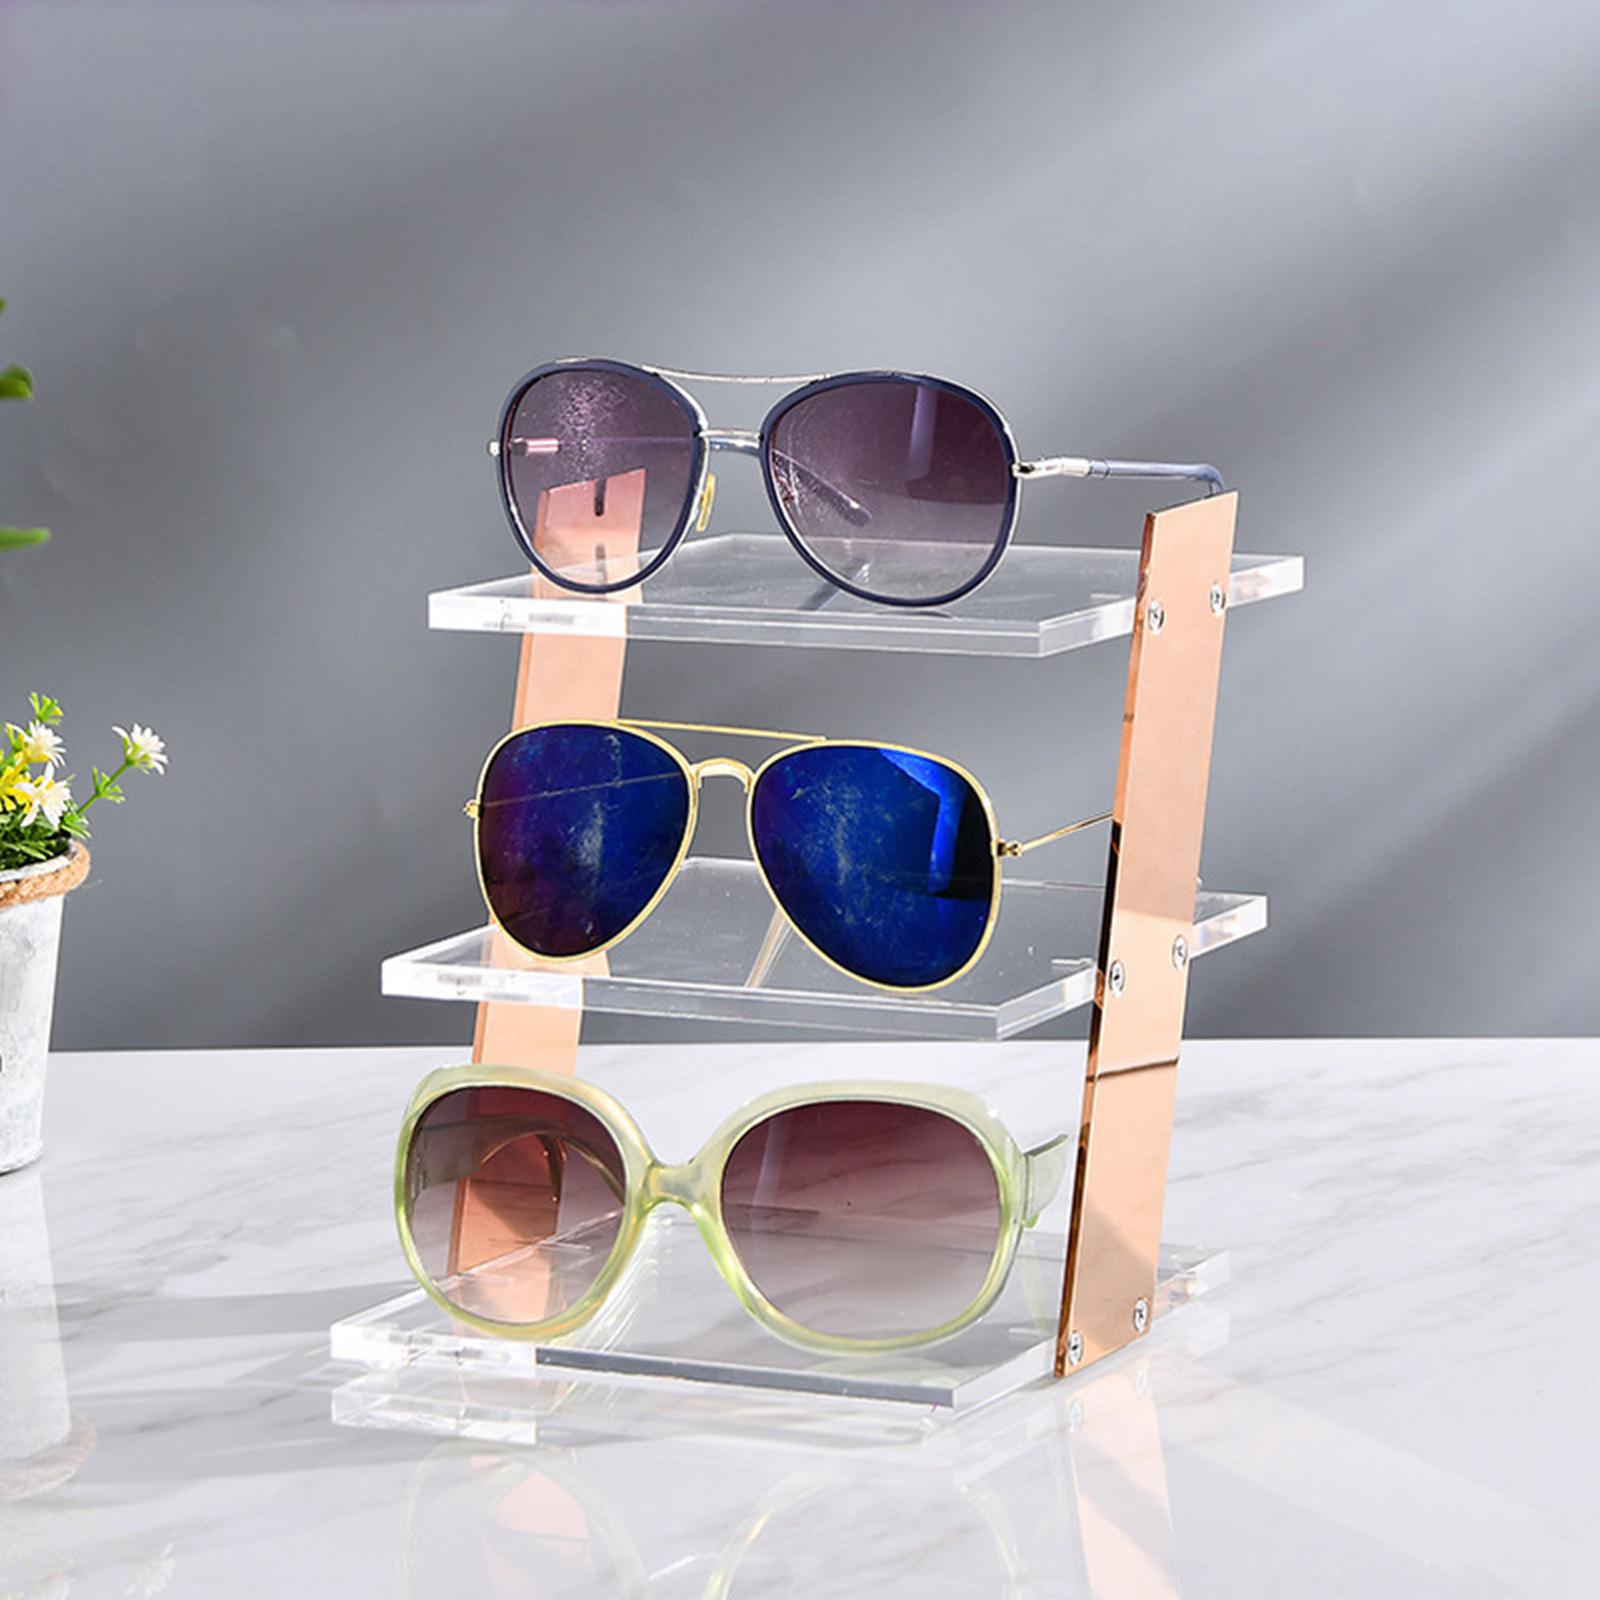 Acrylic Riser Stands 4 Steps Decorative Desktop Shelves Glasses Display Stand gold